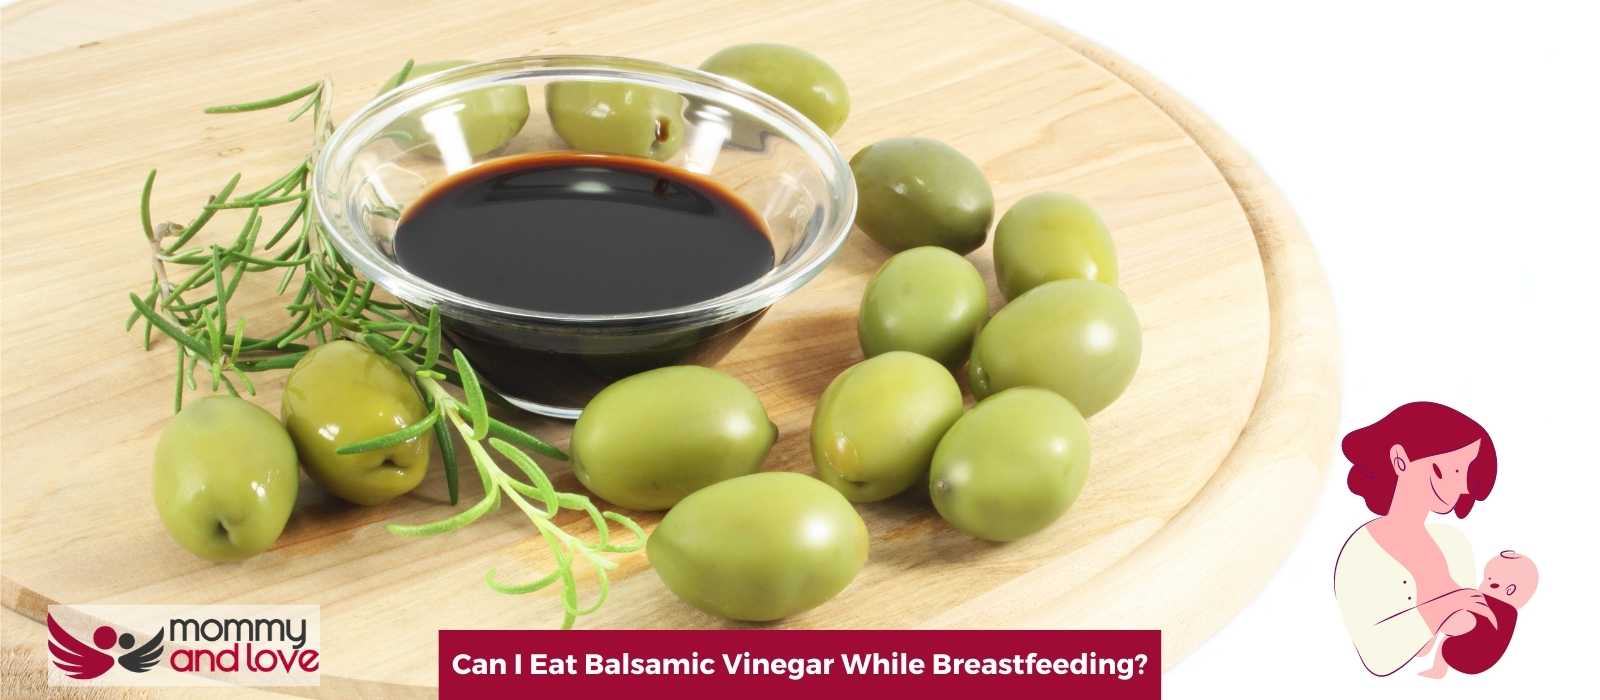 Can I Eat Balsamic Vinegar While Breastfeeding